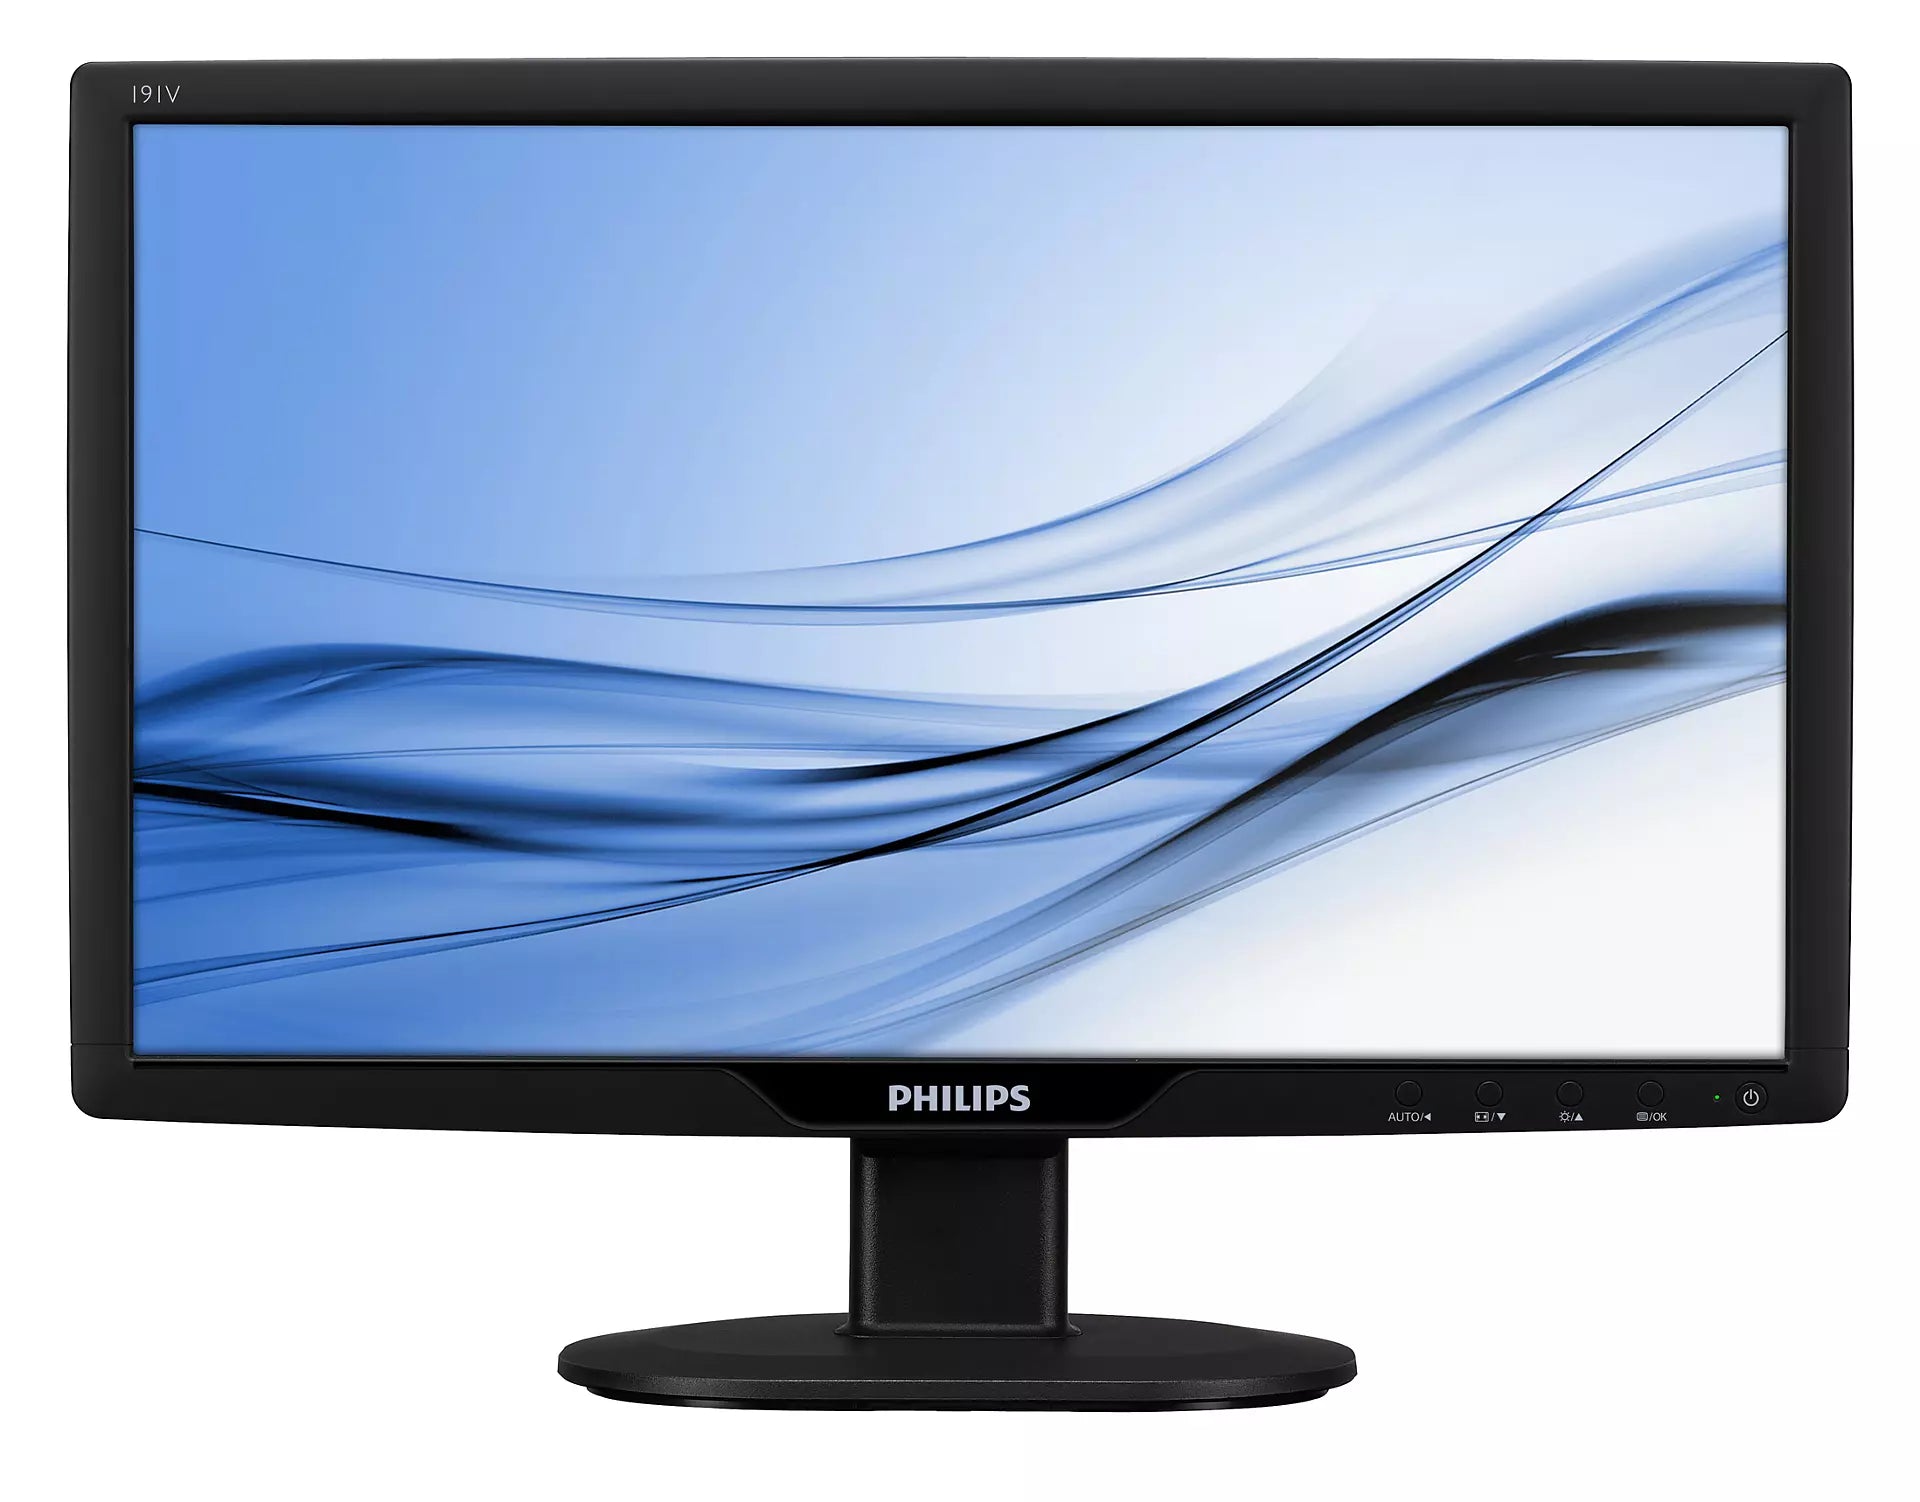 Philips 191V2 Monitor LCD TFT 19